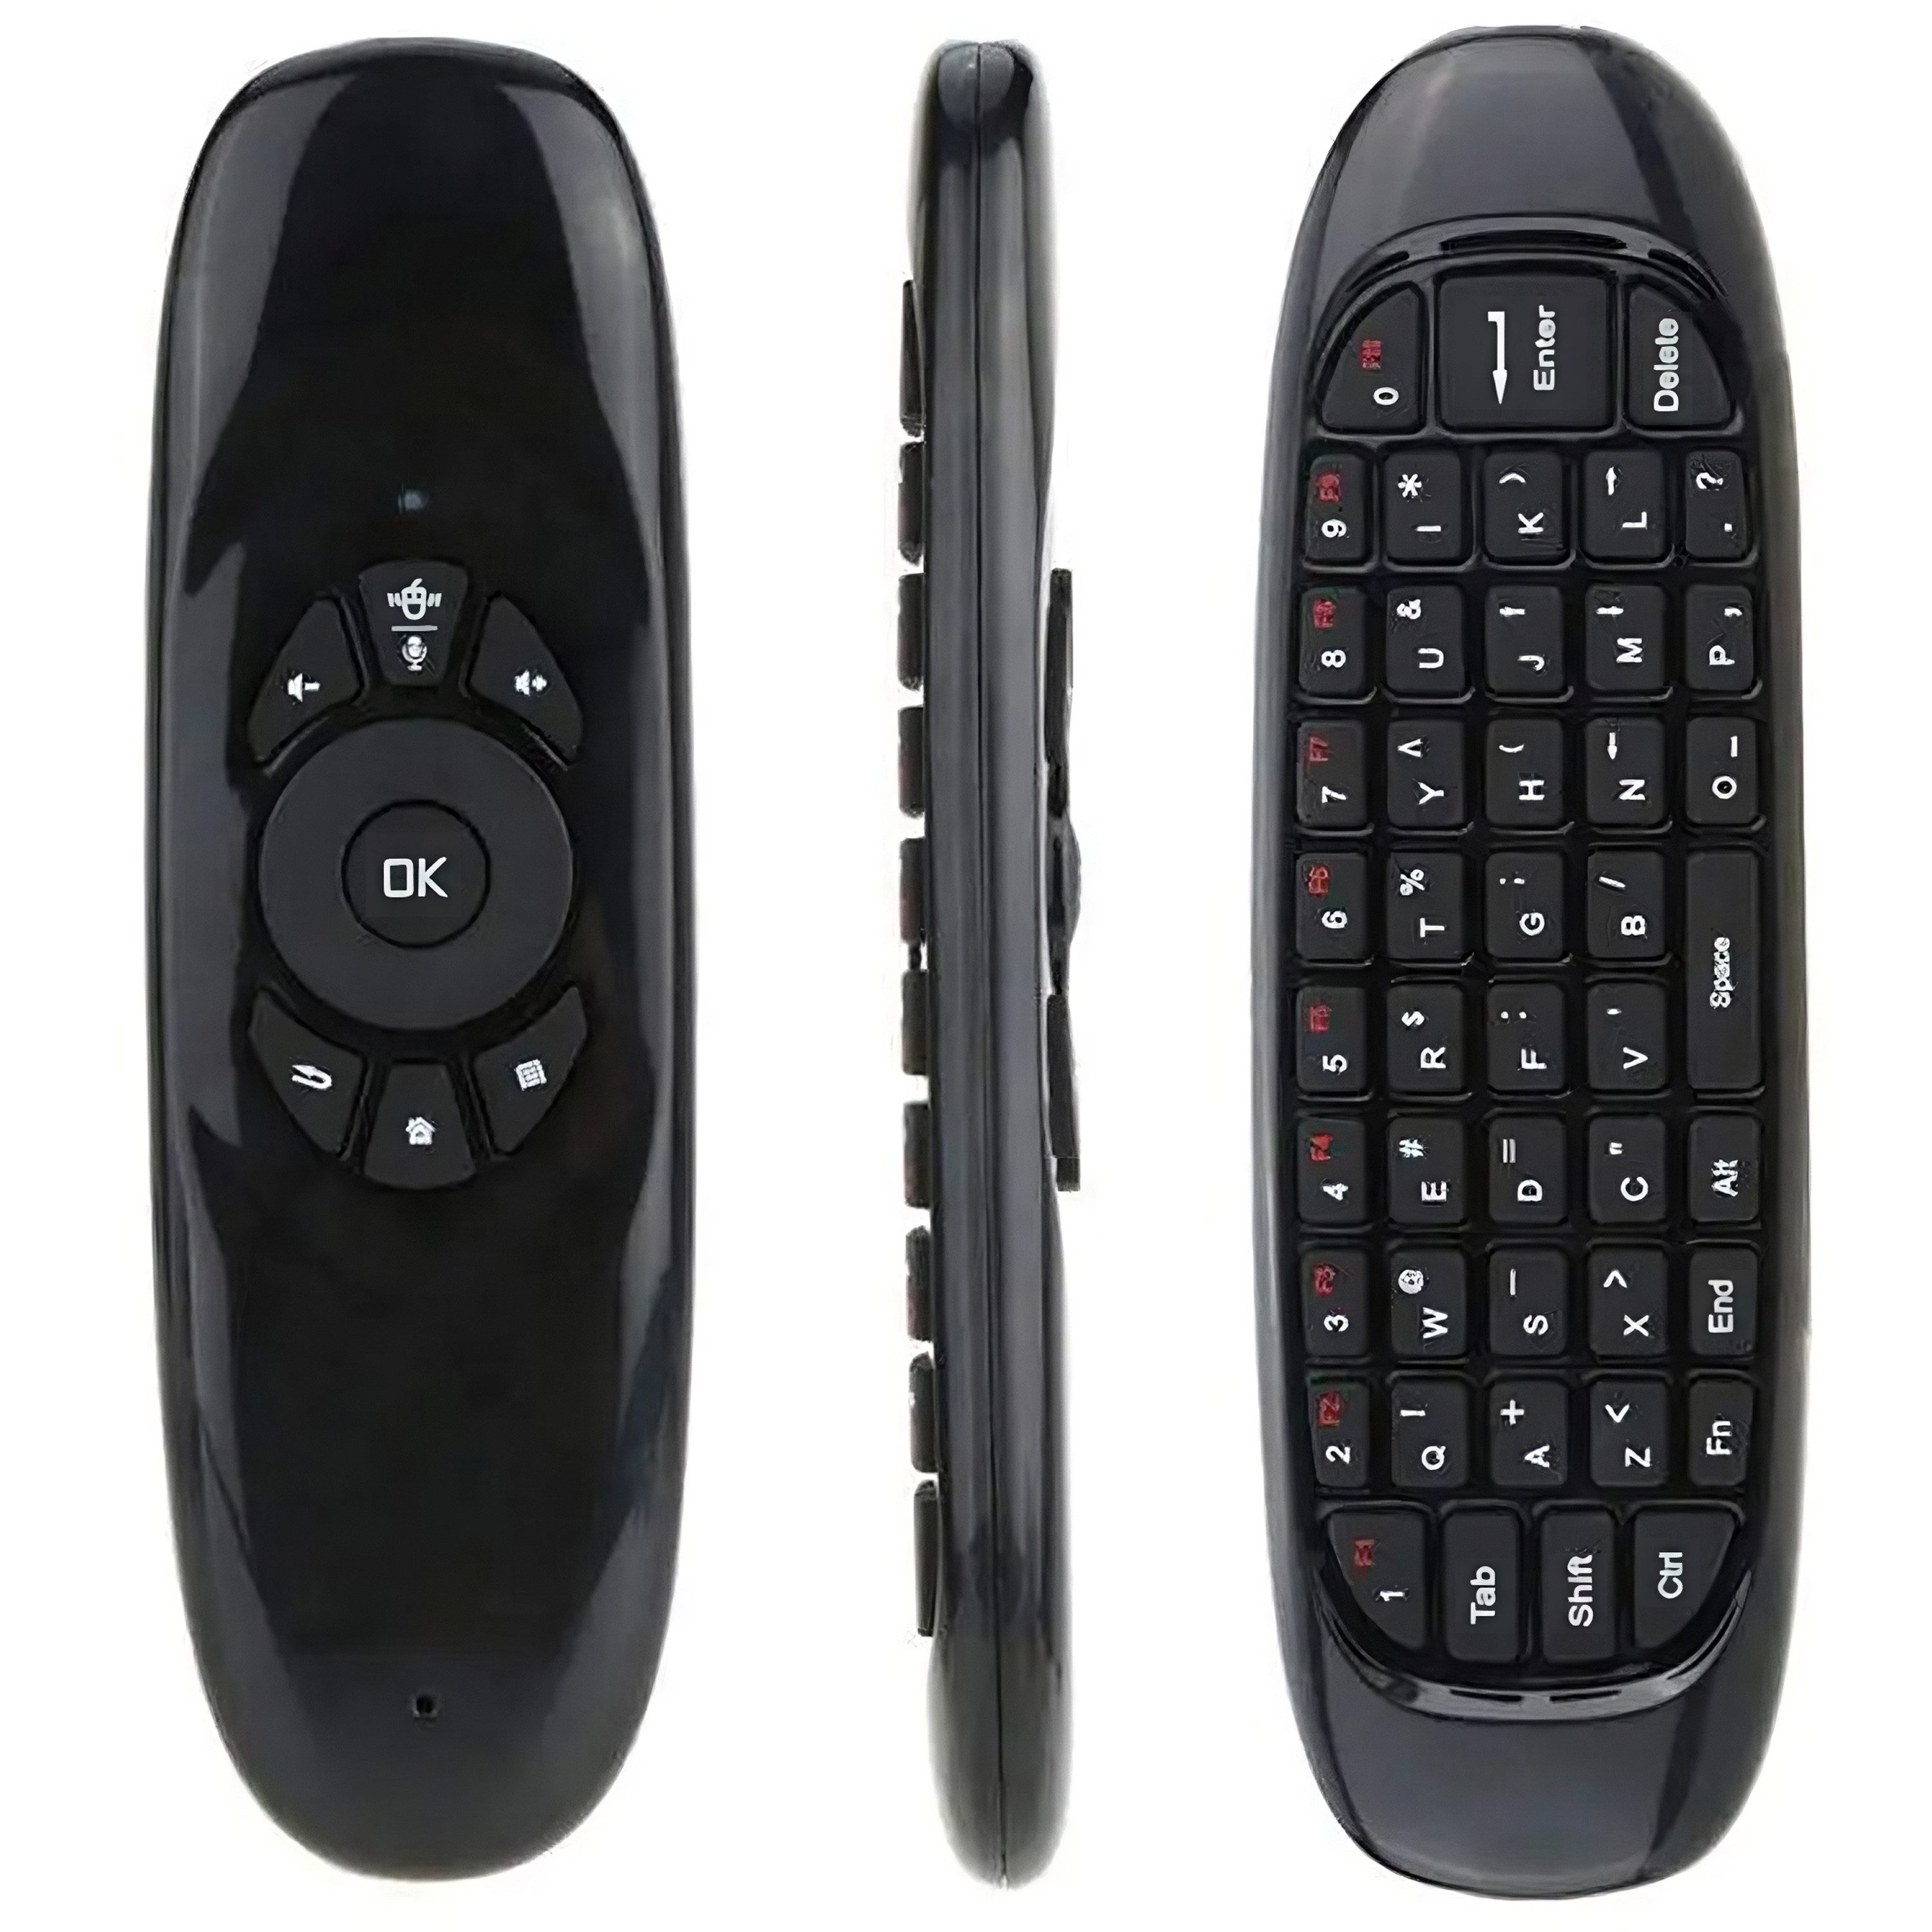 Retoo Air Mouse Fernbedienung Tastatur mit Gyro Drahtlose 2.4G TV PC Tastatur (Fernbedienung Tastatur und Maus, 2.4G Air Mouse, Remote Control)